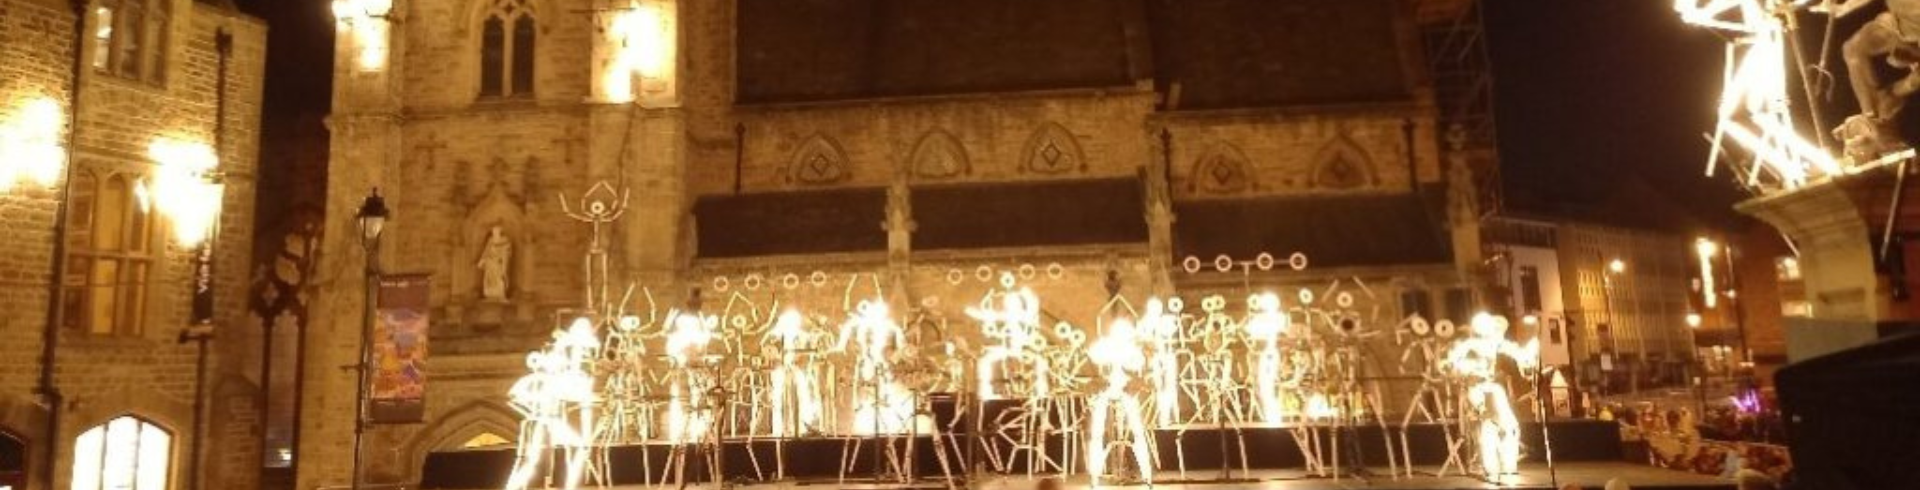 Illuminated metal orchestra in Durham Market Place